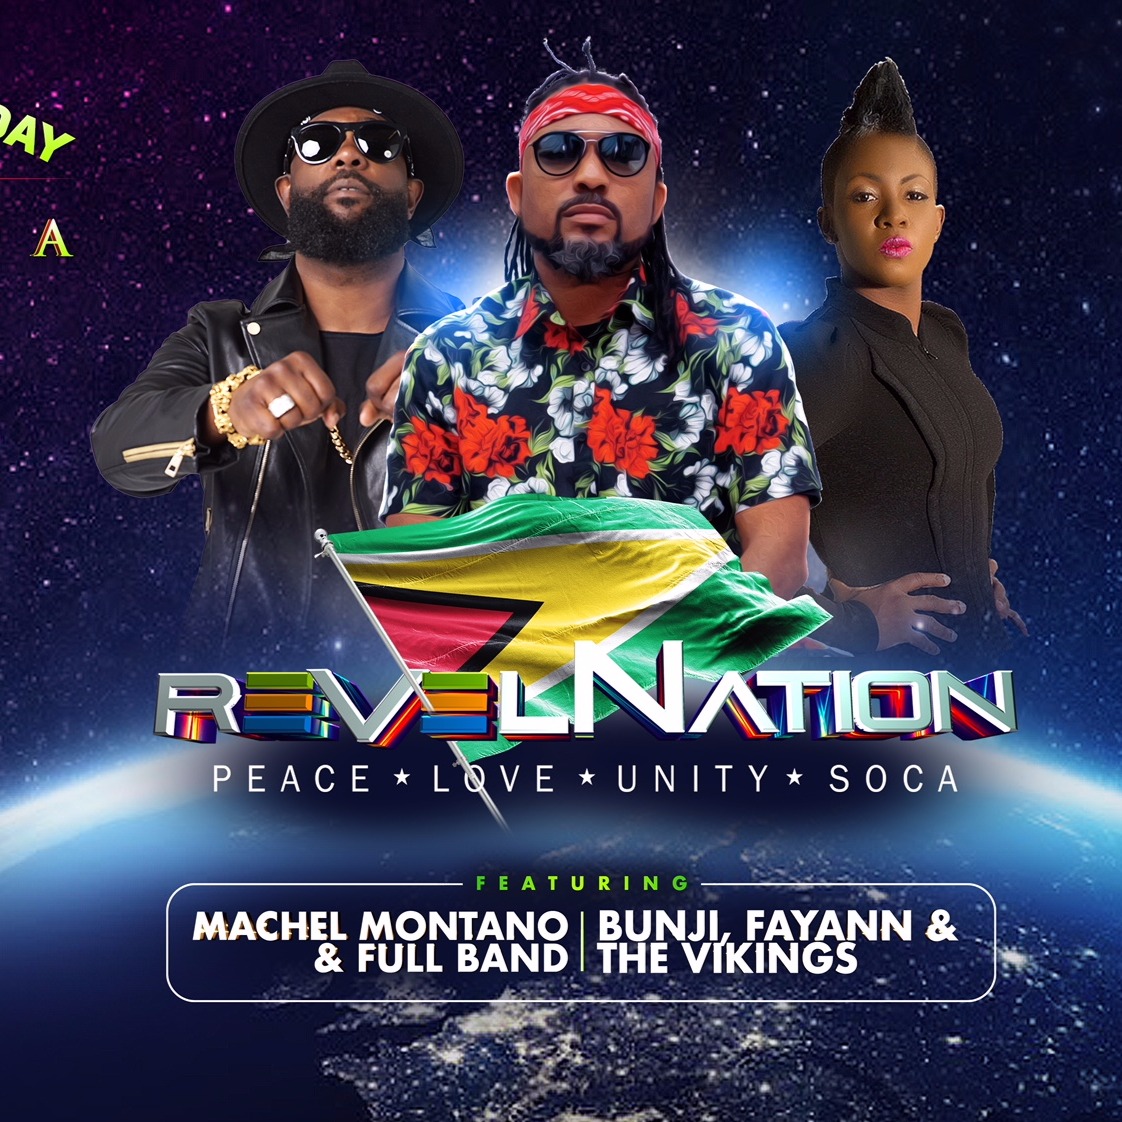 Guyana Carnival - RevelNation